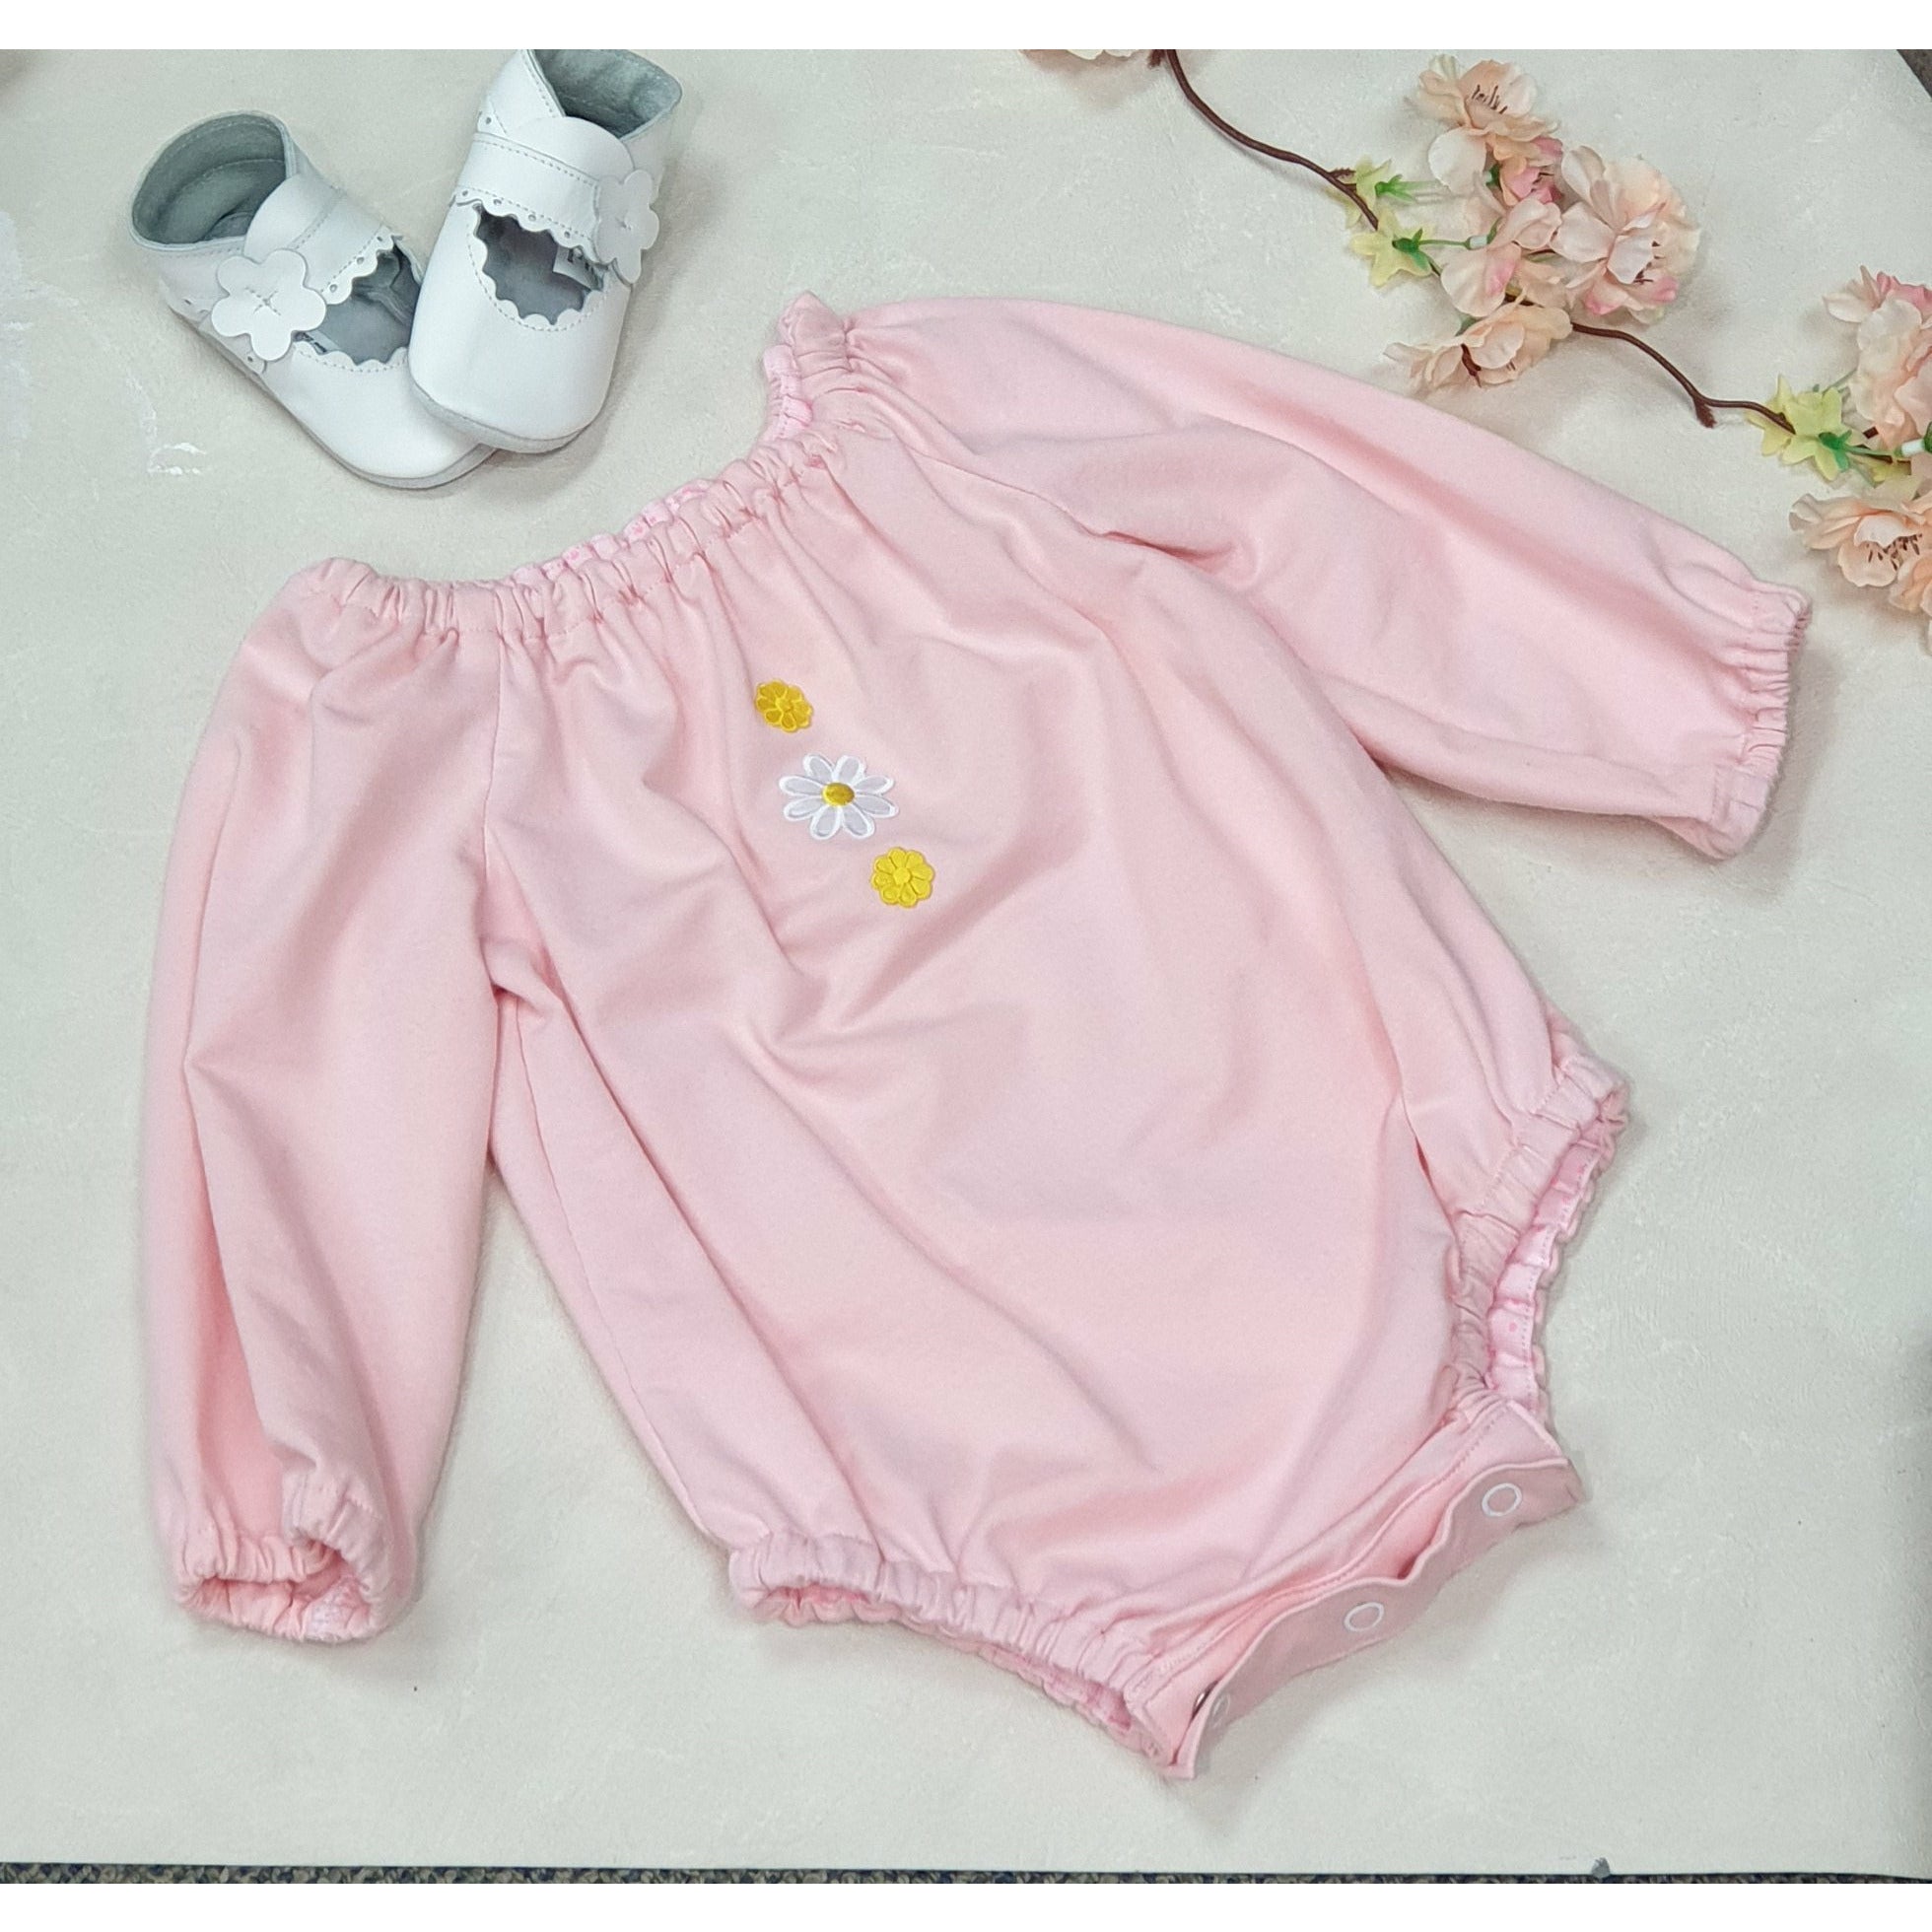 Petal Body suit - Pink Kode Kids